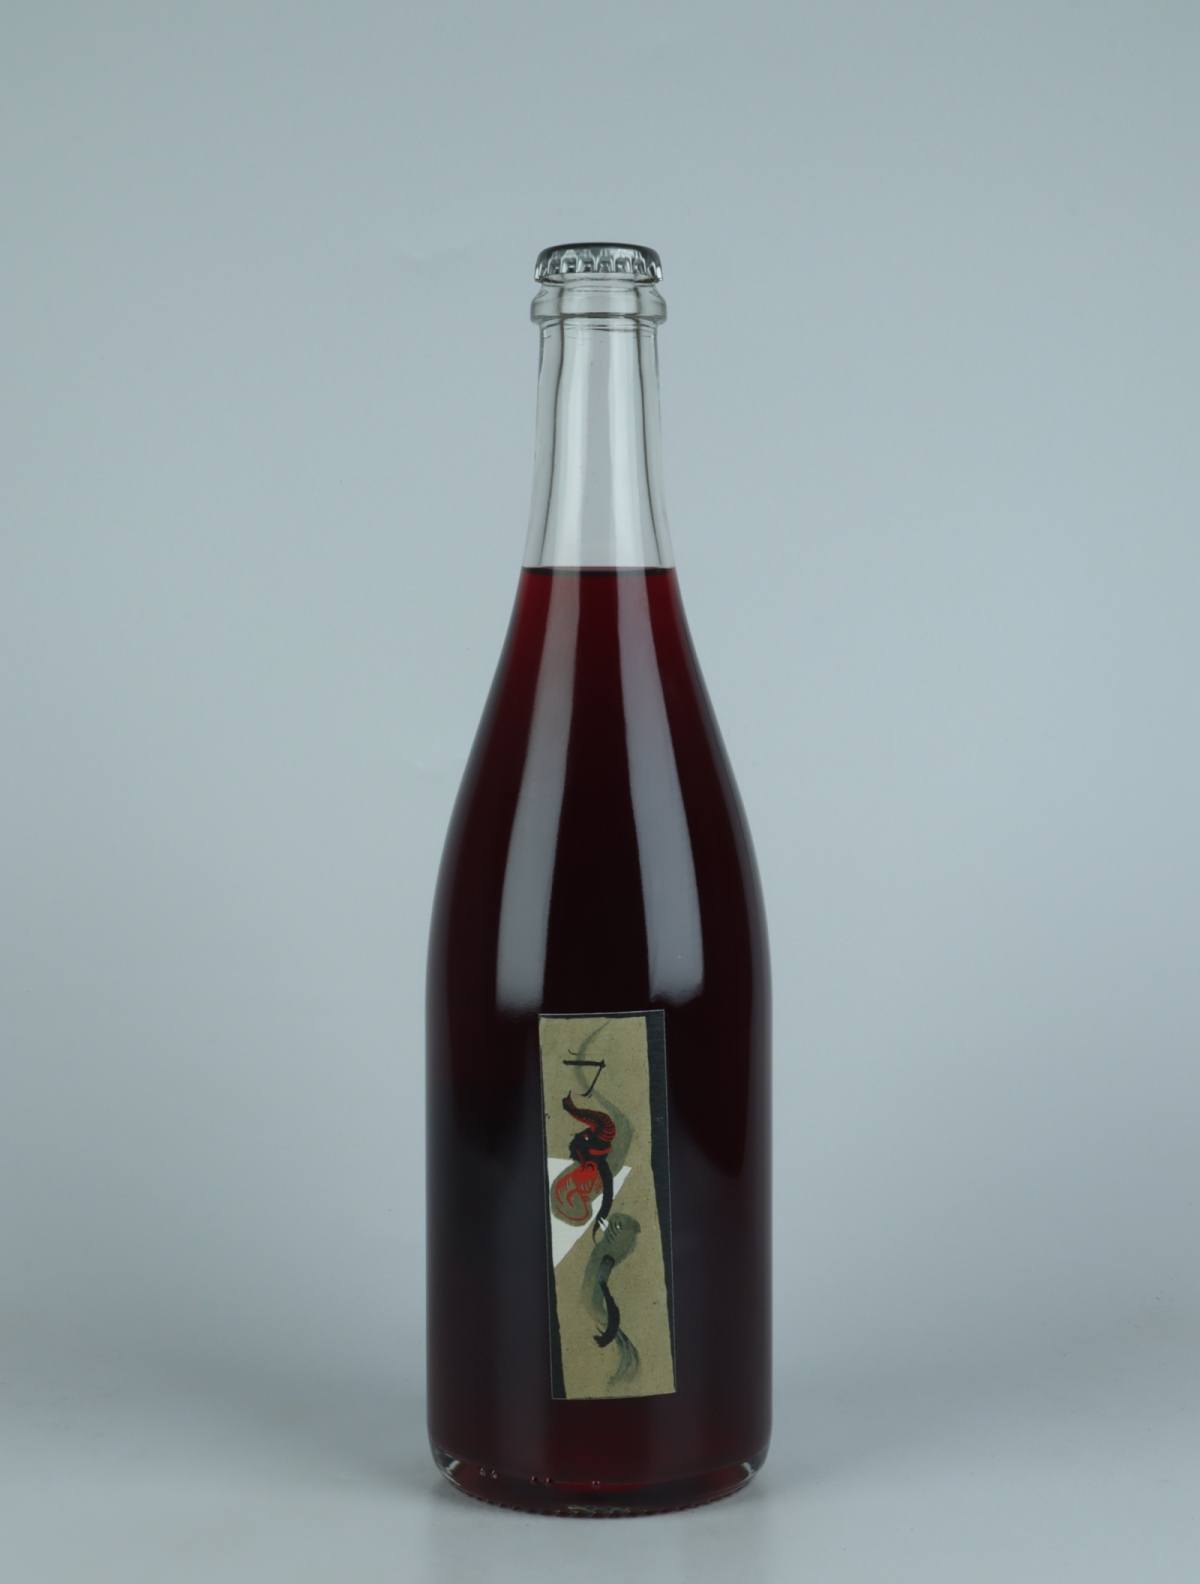 A bottle 2022 Arc Red wine from Absurde Génie des Fleurs, Languedoc in France